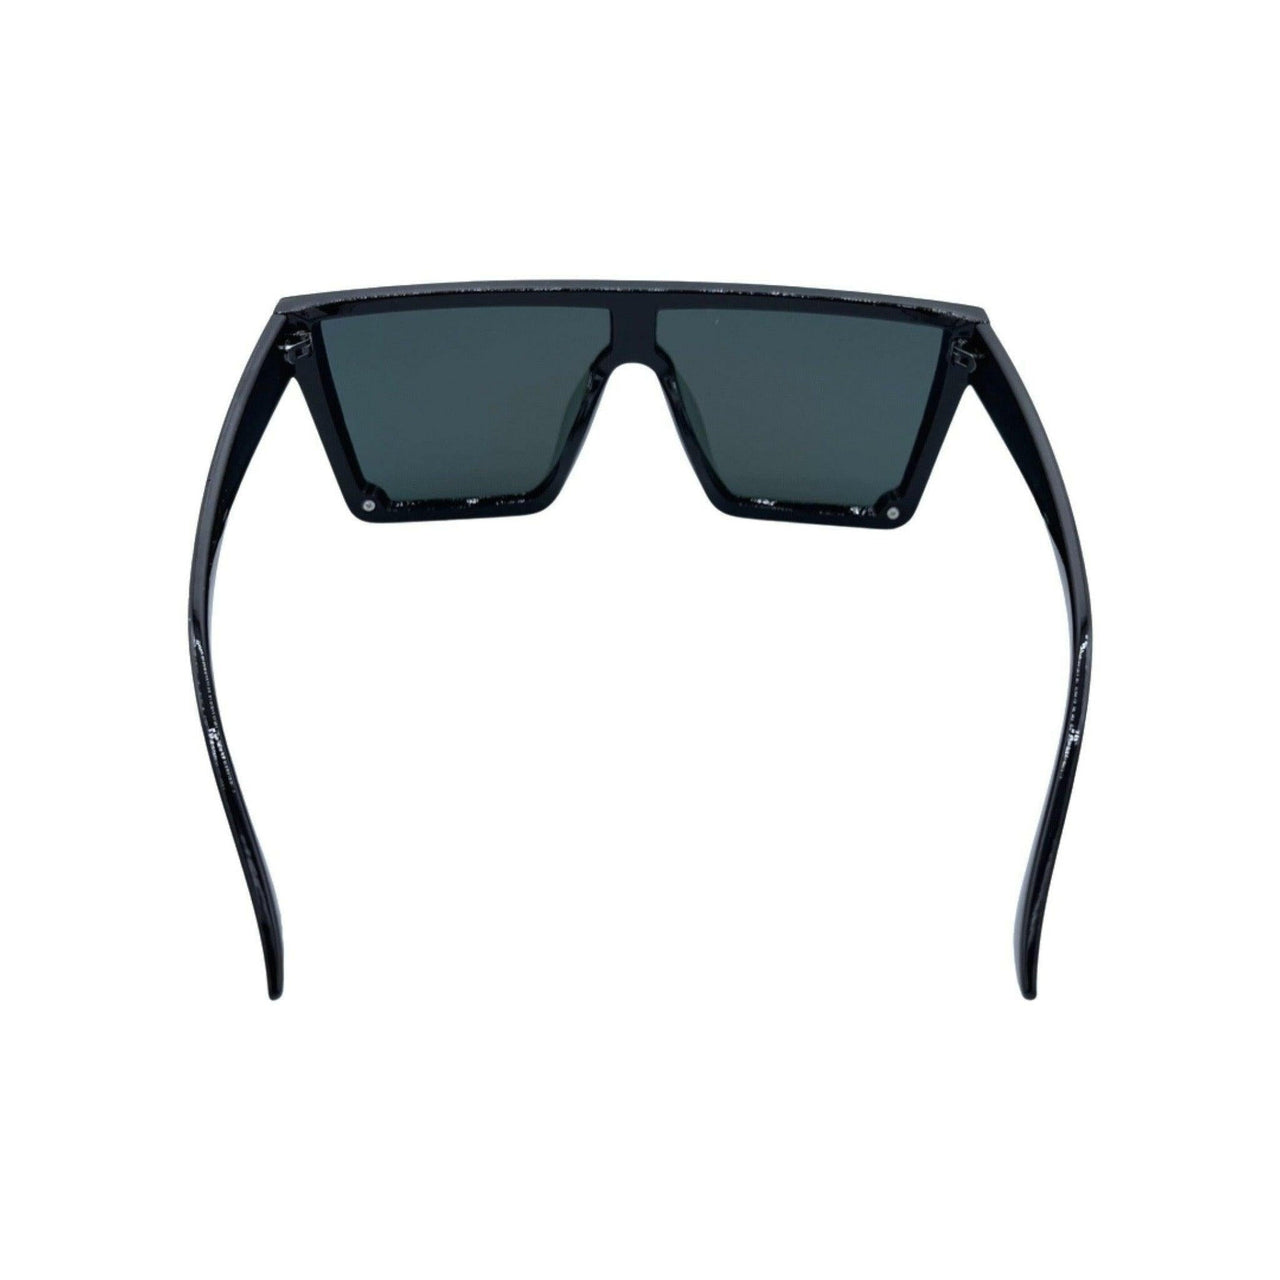 Gold OG Mirrored Sunglasses - Rebel Reaper Clothing CompanySunglasses